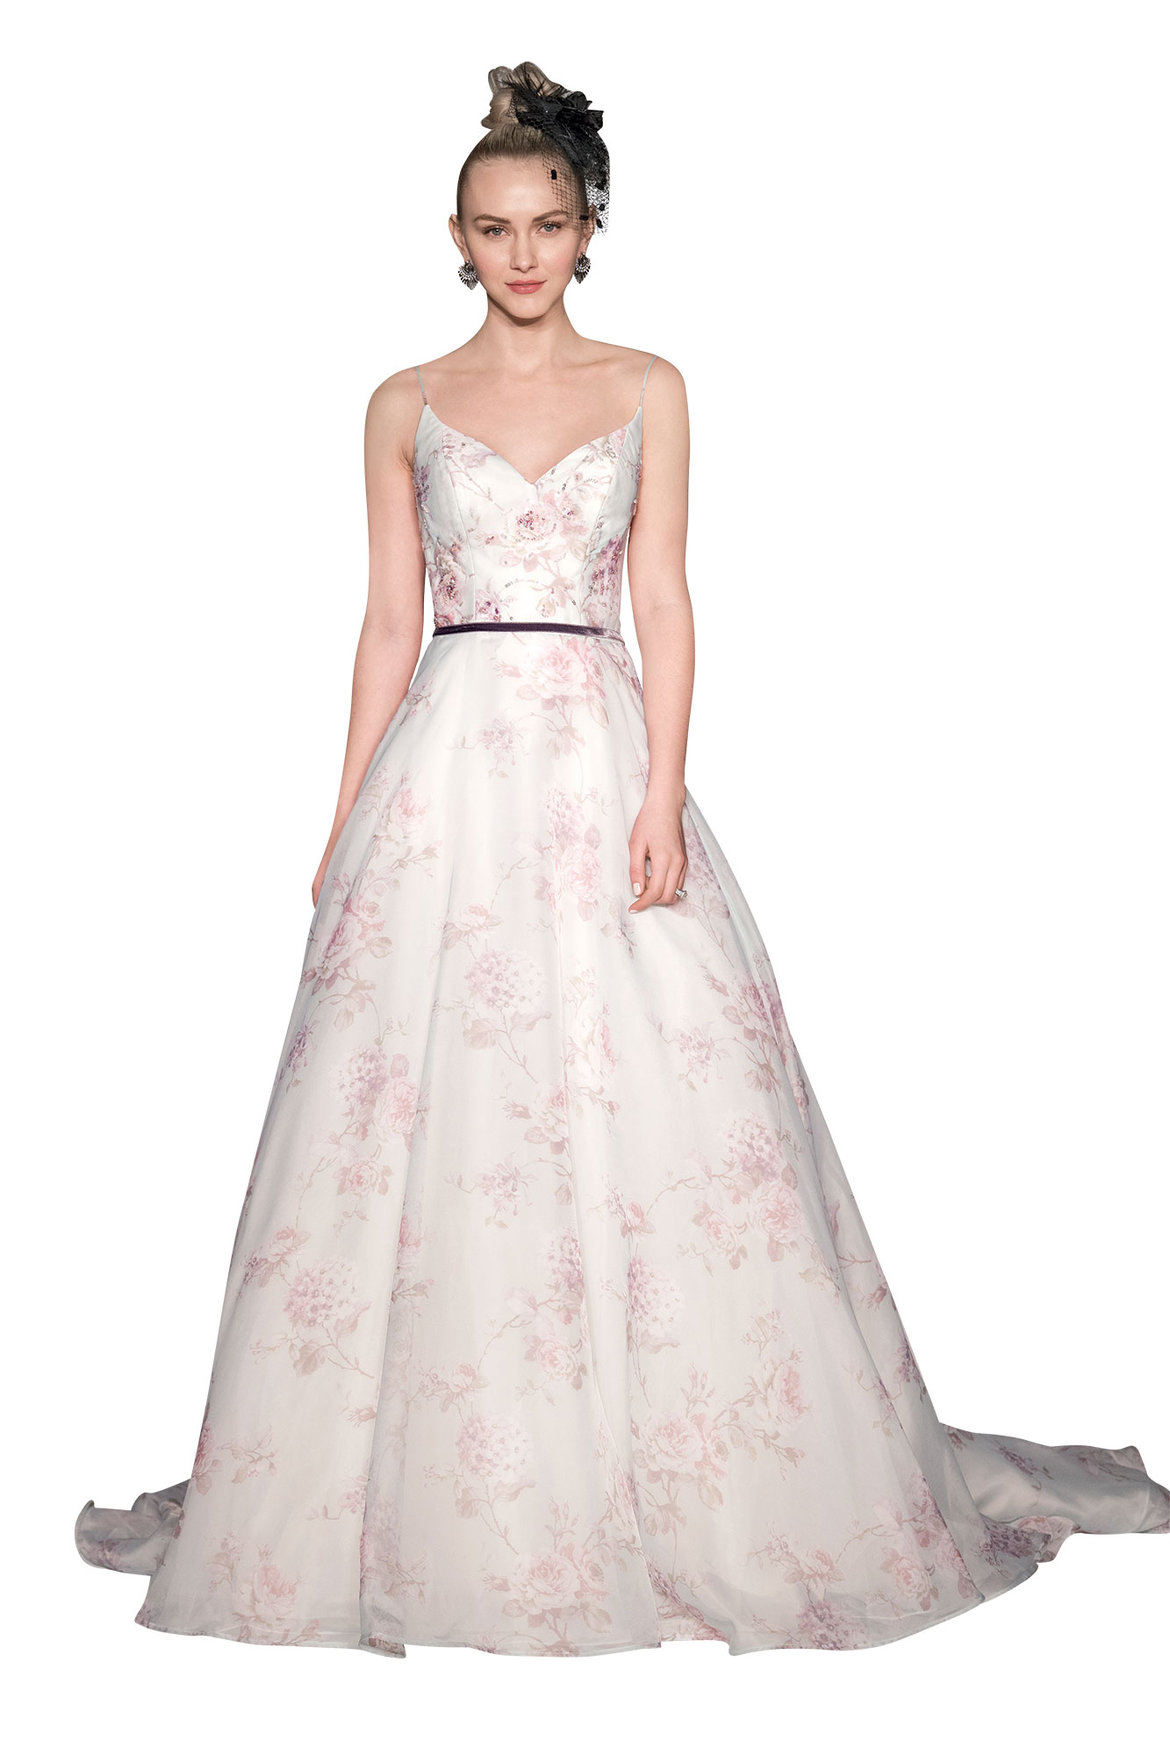 sottero and midgley floral wedding dress